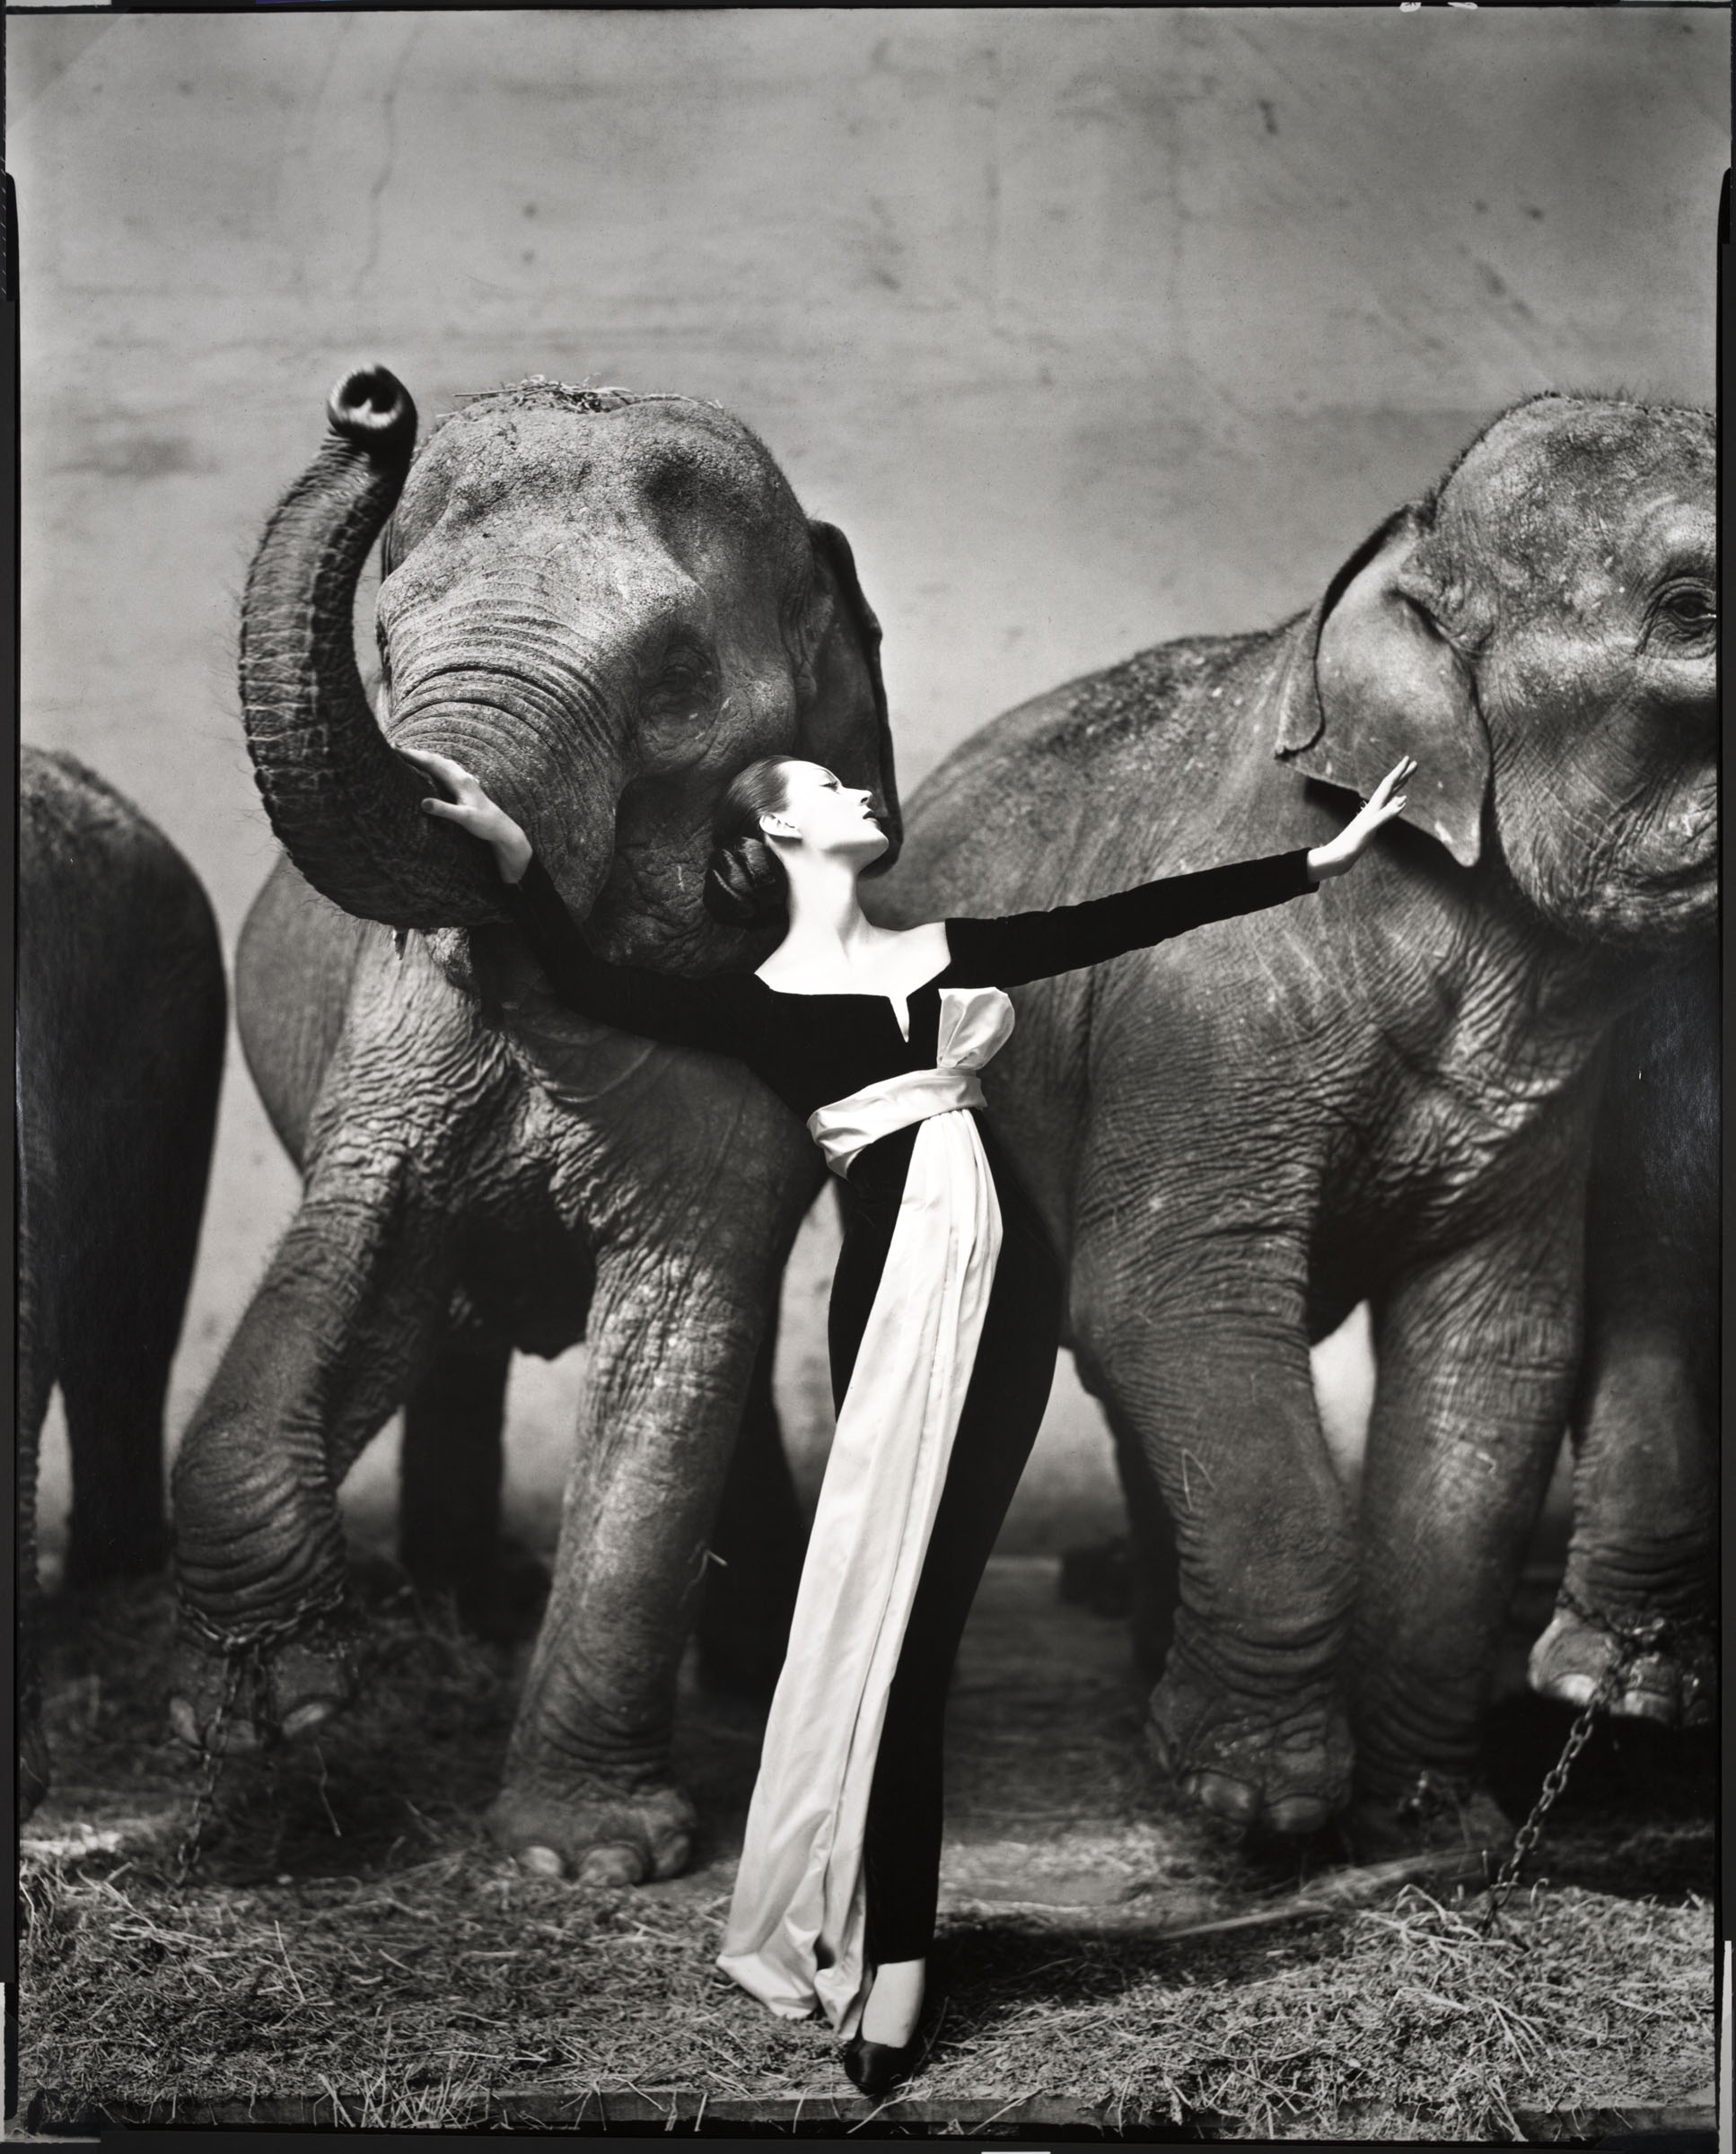 Richard Avedon. Dovima with elephants, evening dress by Dior, Cirque d'hiver, Paris. August 1955. @The Richard Avedon Foundation